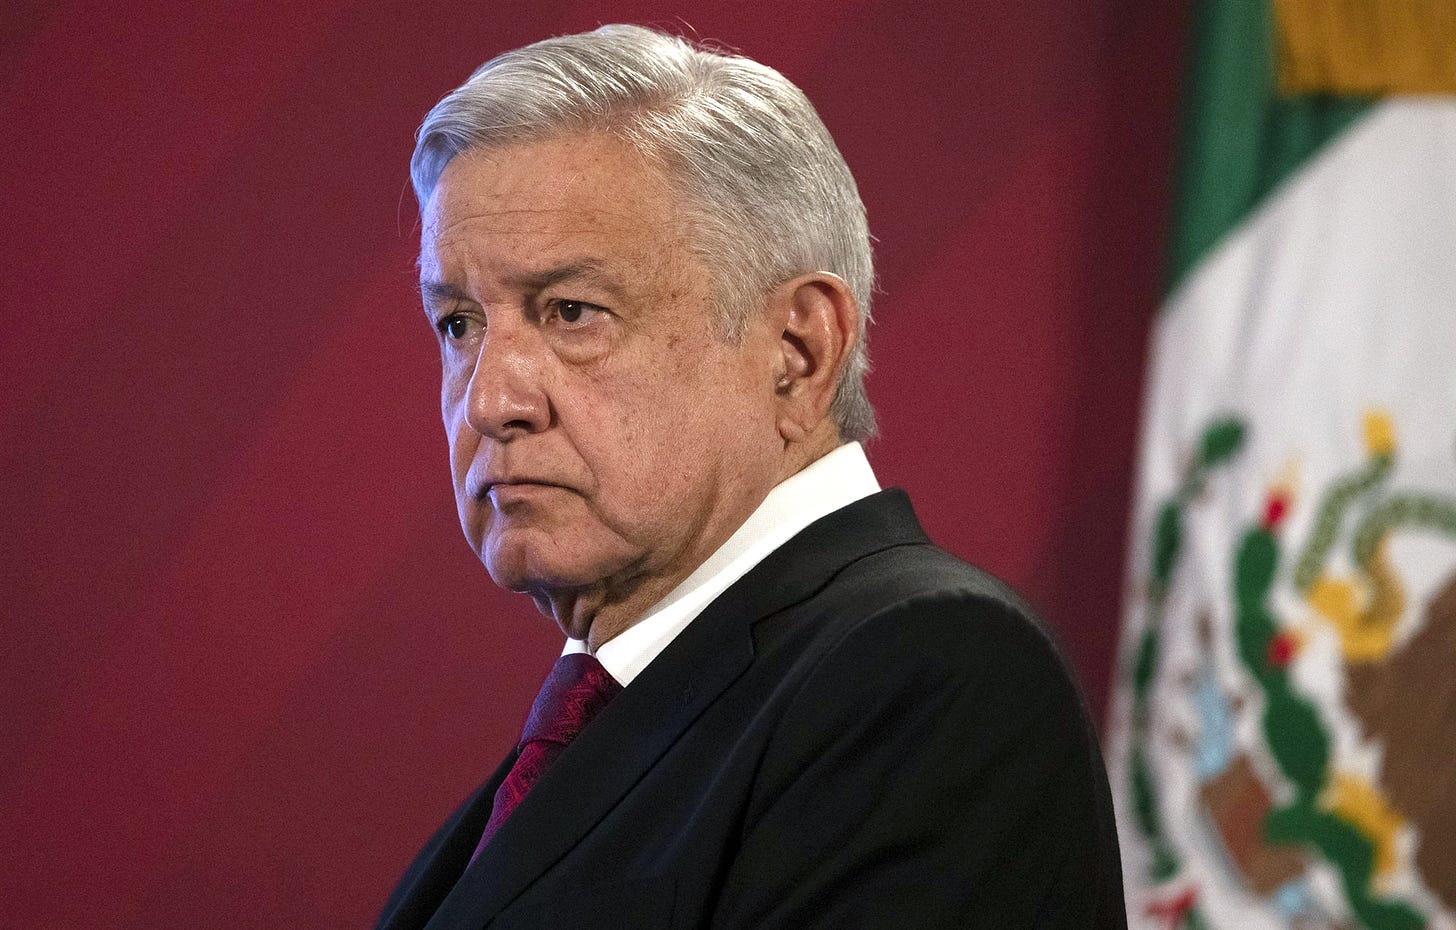 In Mexico, López Obrador's 'teflon' presidency takes a hit in the polls,  but survives